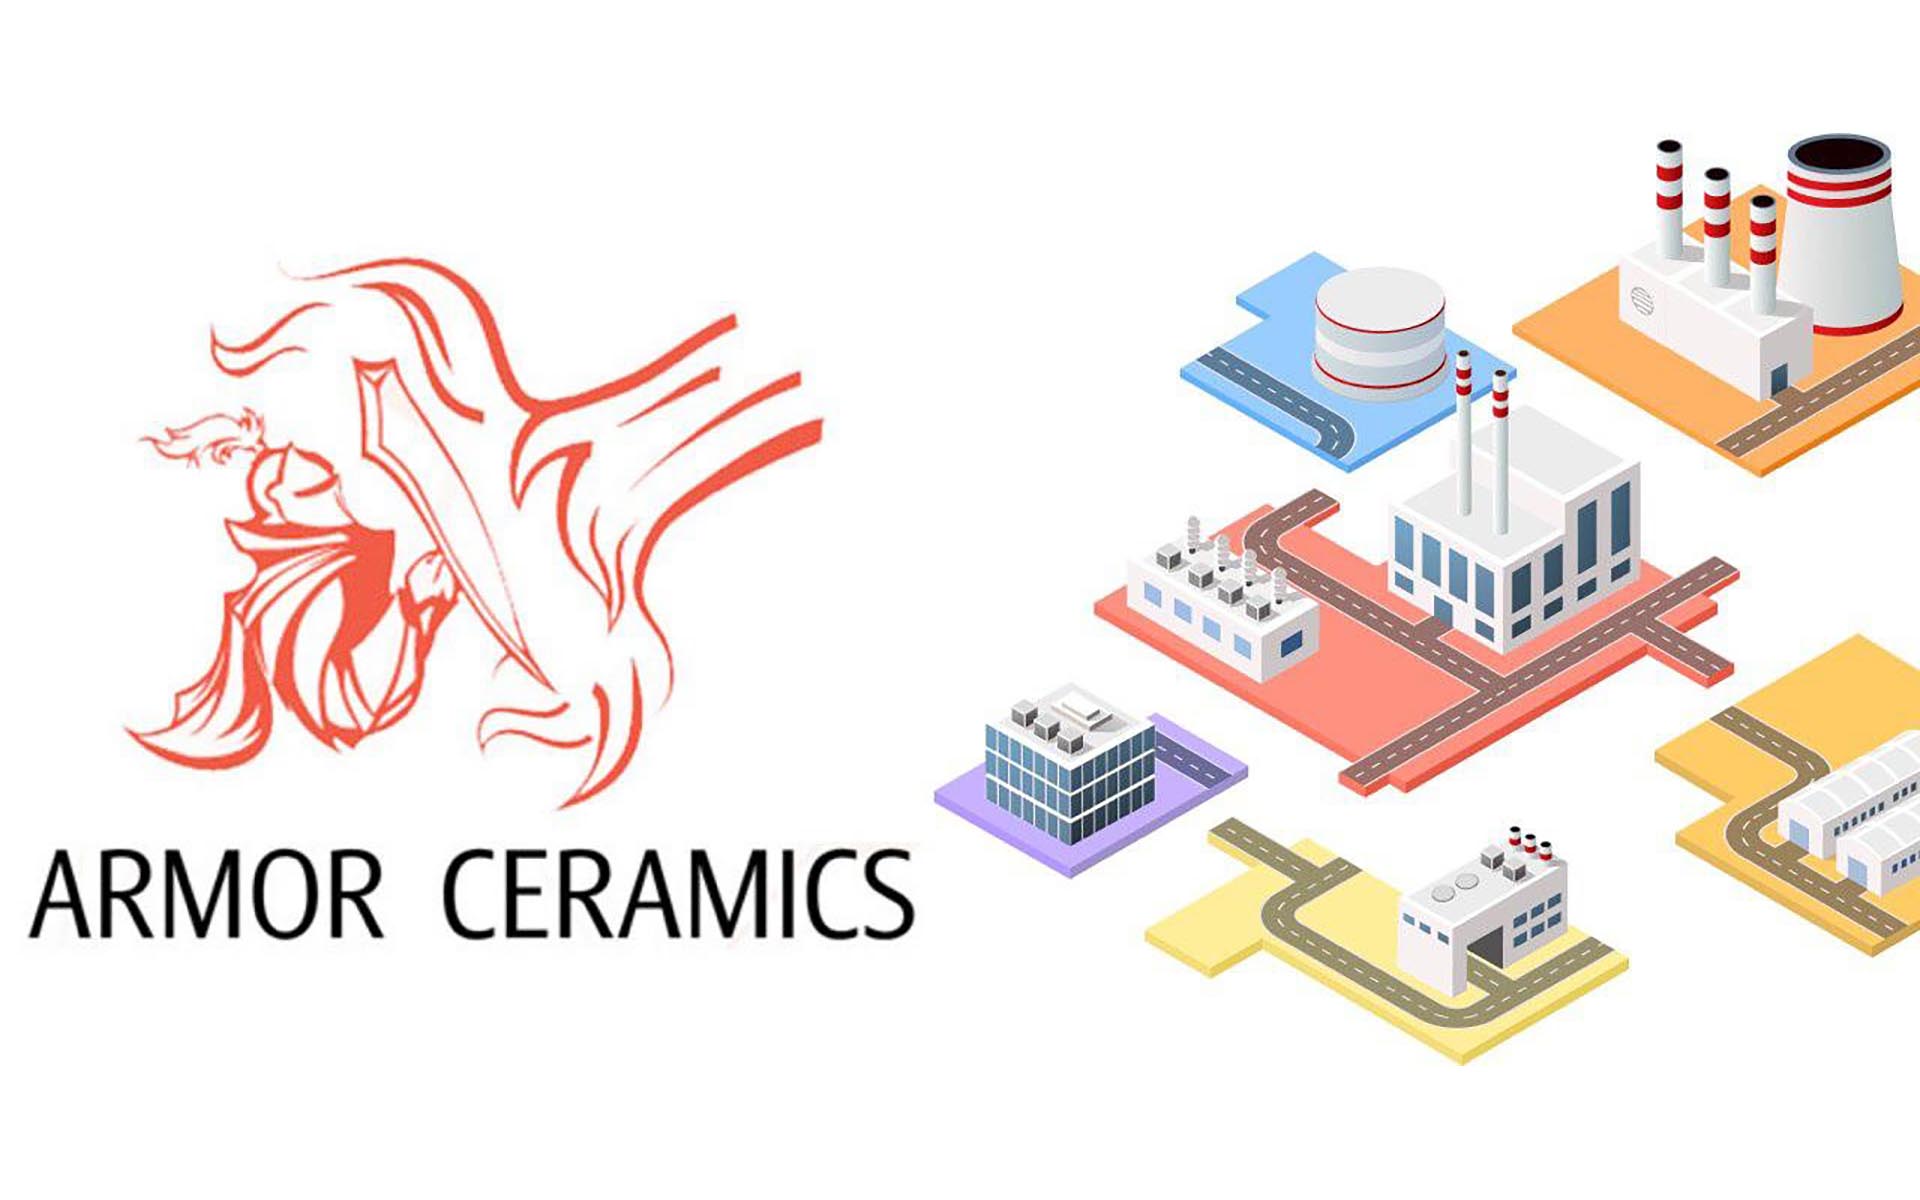 Armor Ceramics Launches Pre-ICO for Blockchain-Based Self Sufficiency in Ukraine’s Heavy Industry